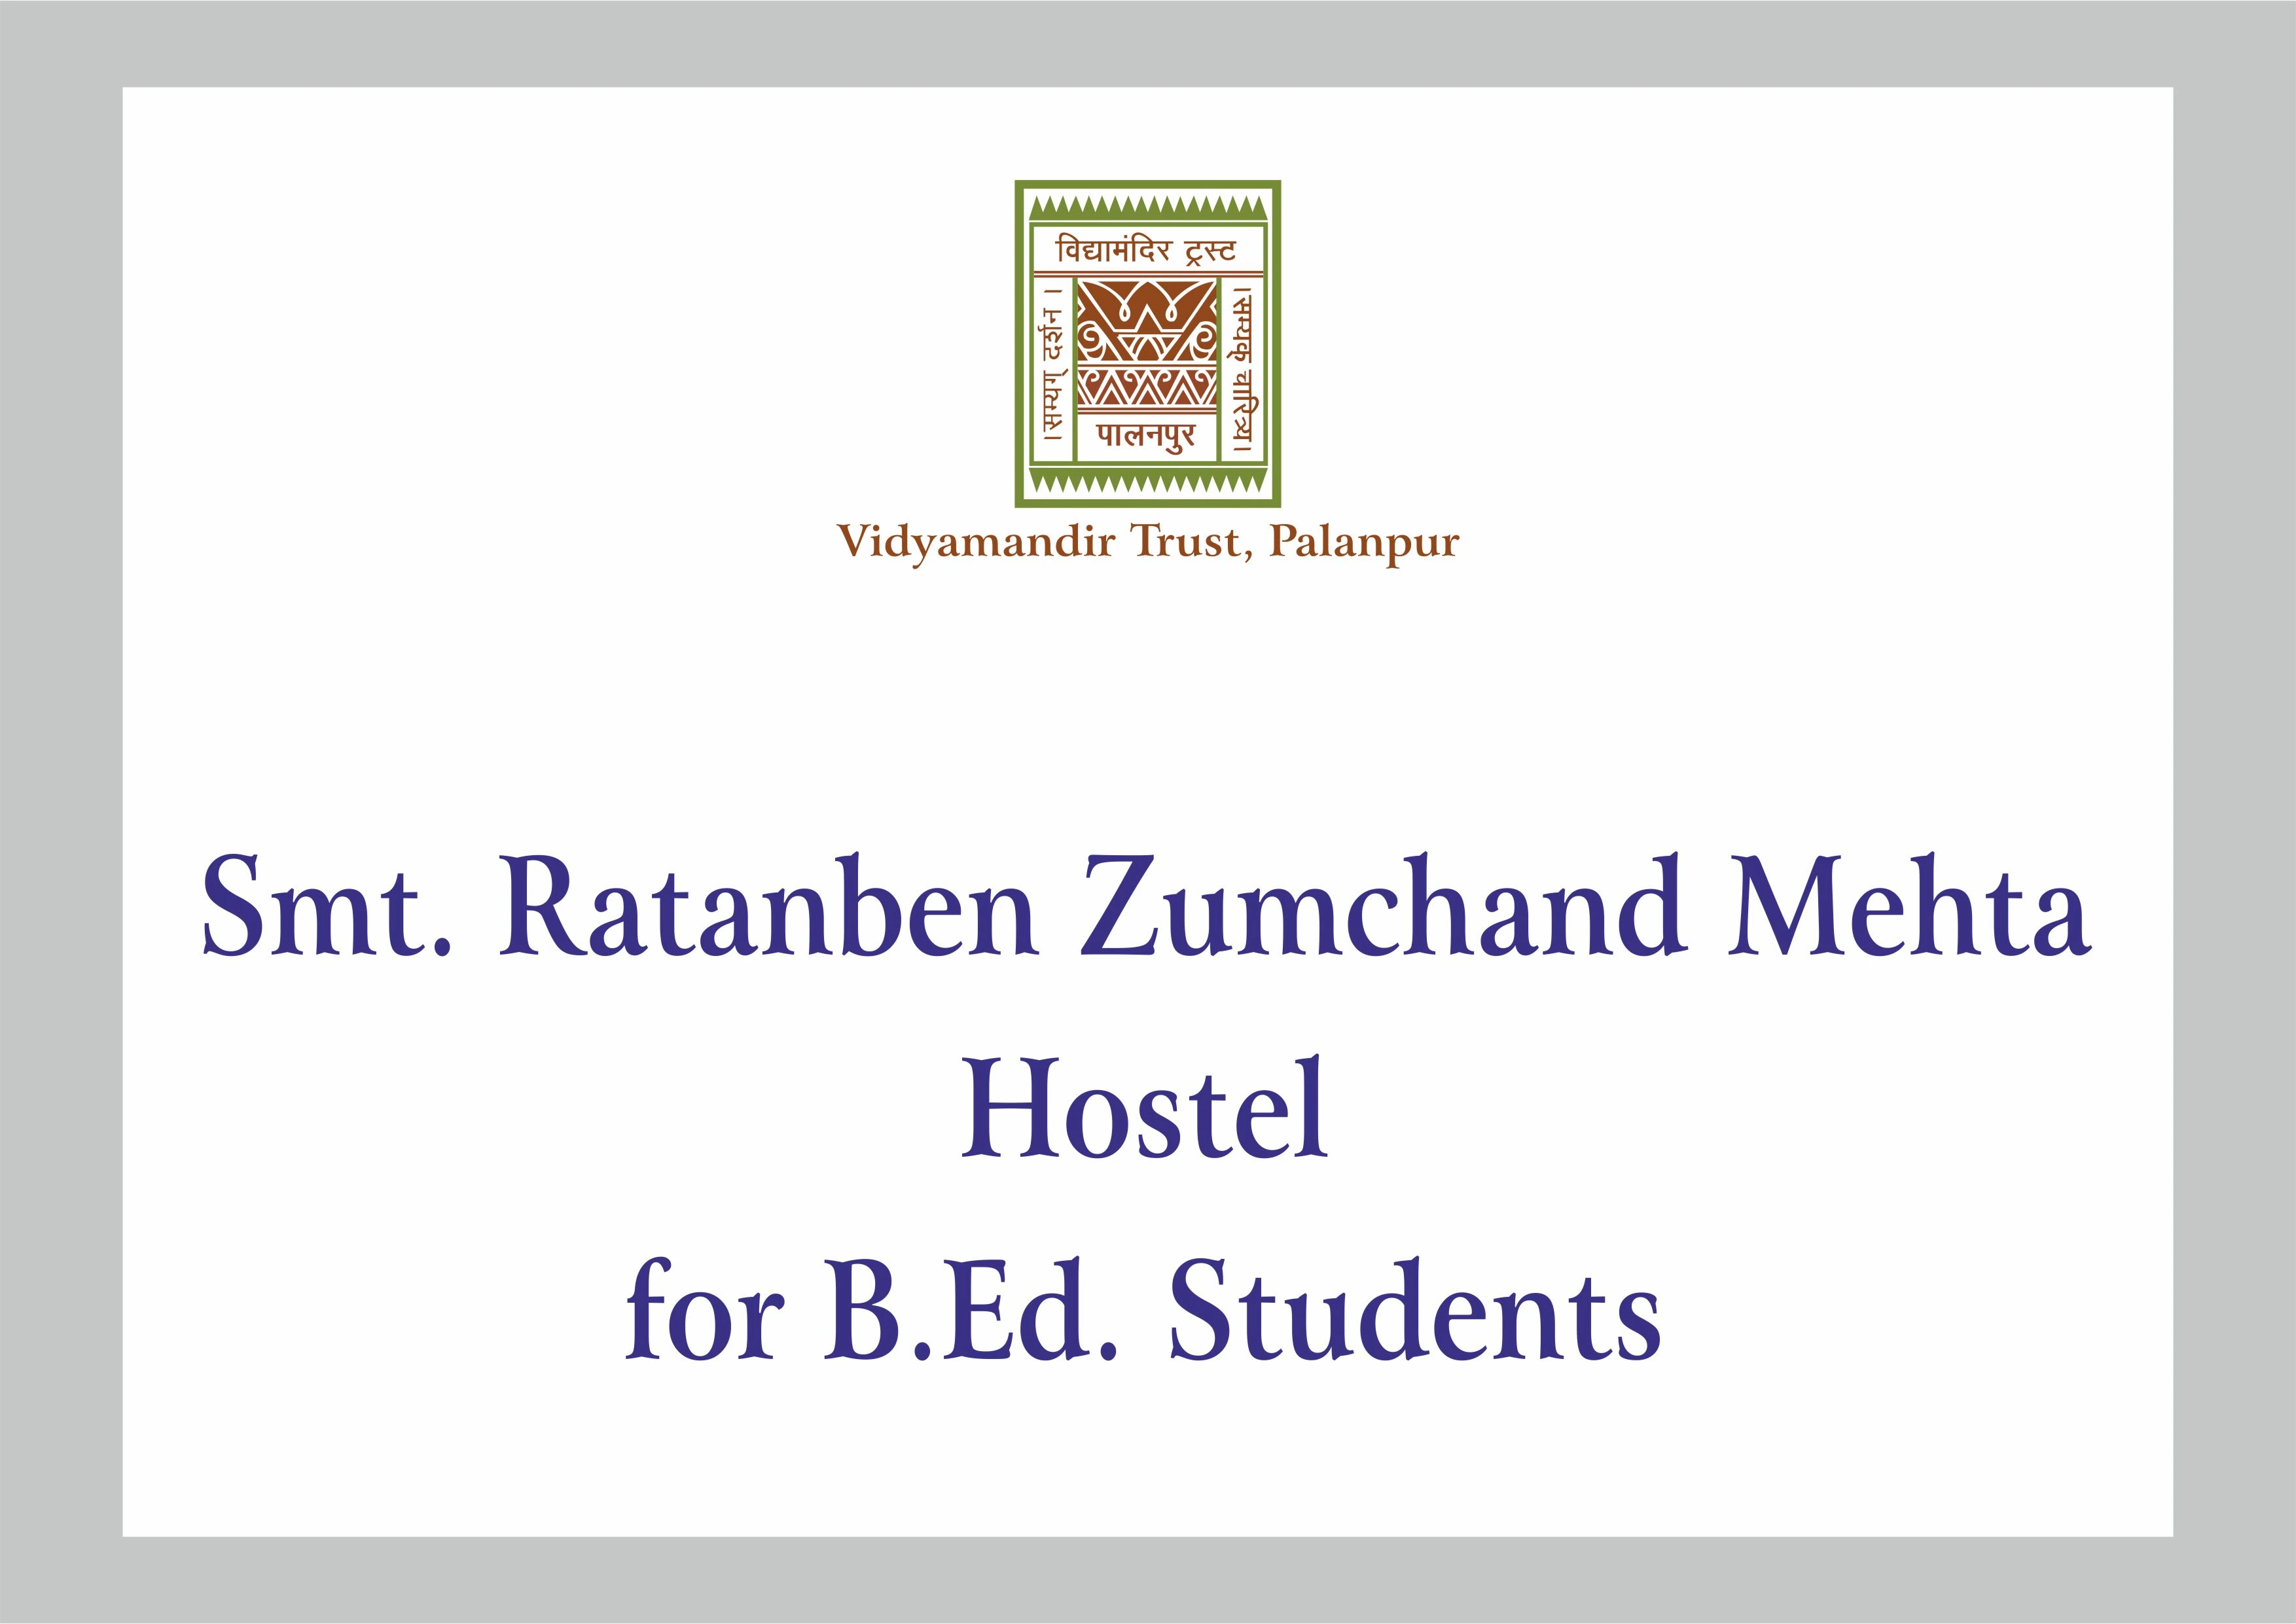 Smt. Ratanben Zumchand Mehta Hostel for B.Ed. Students - Building Photo